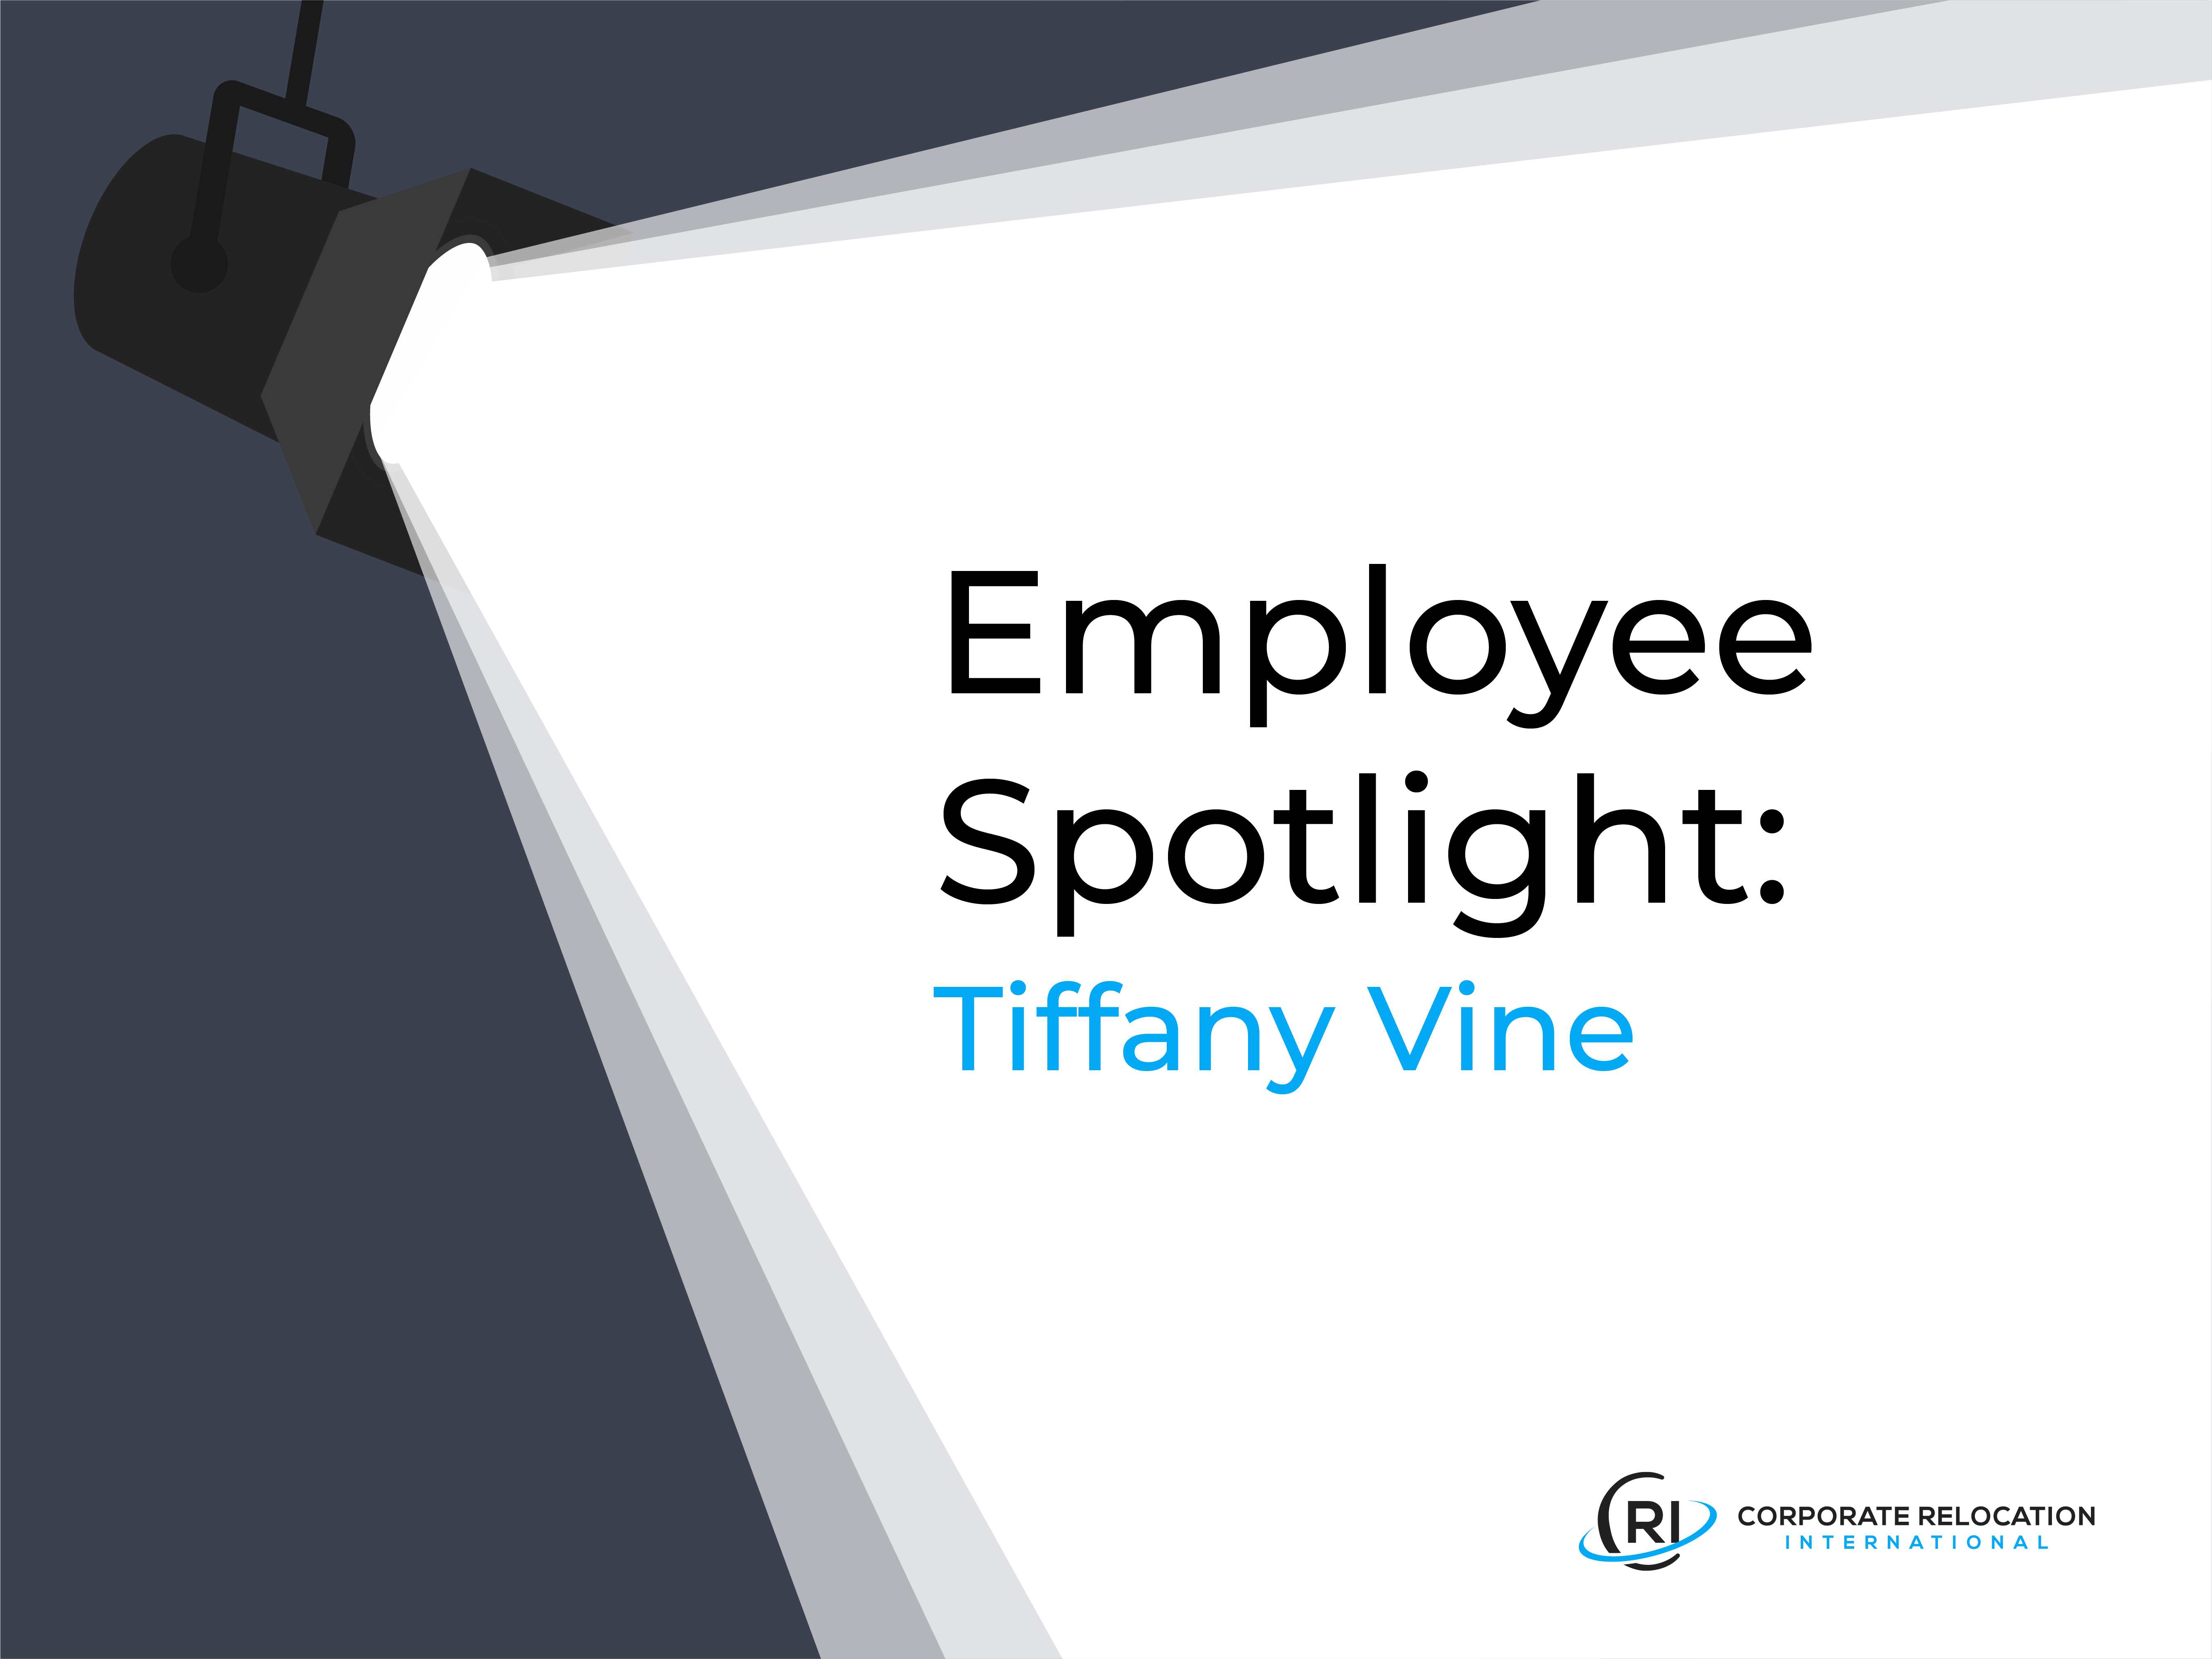 Tiffany Vine - Corporate Relocation International